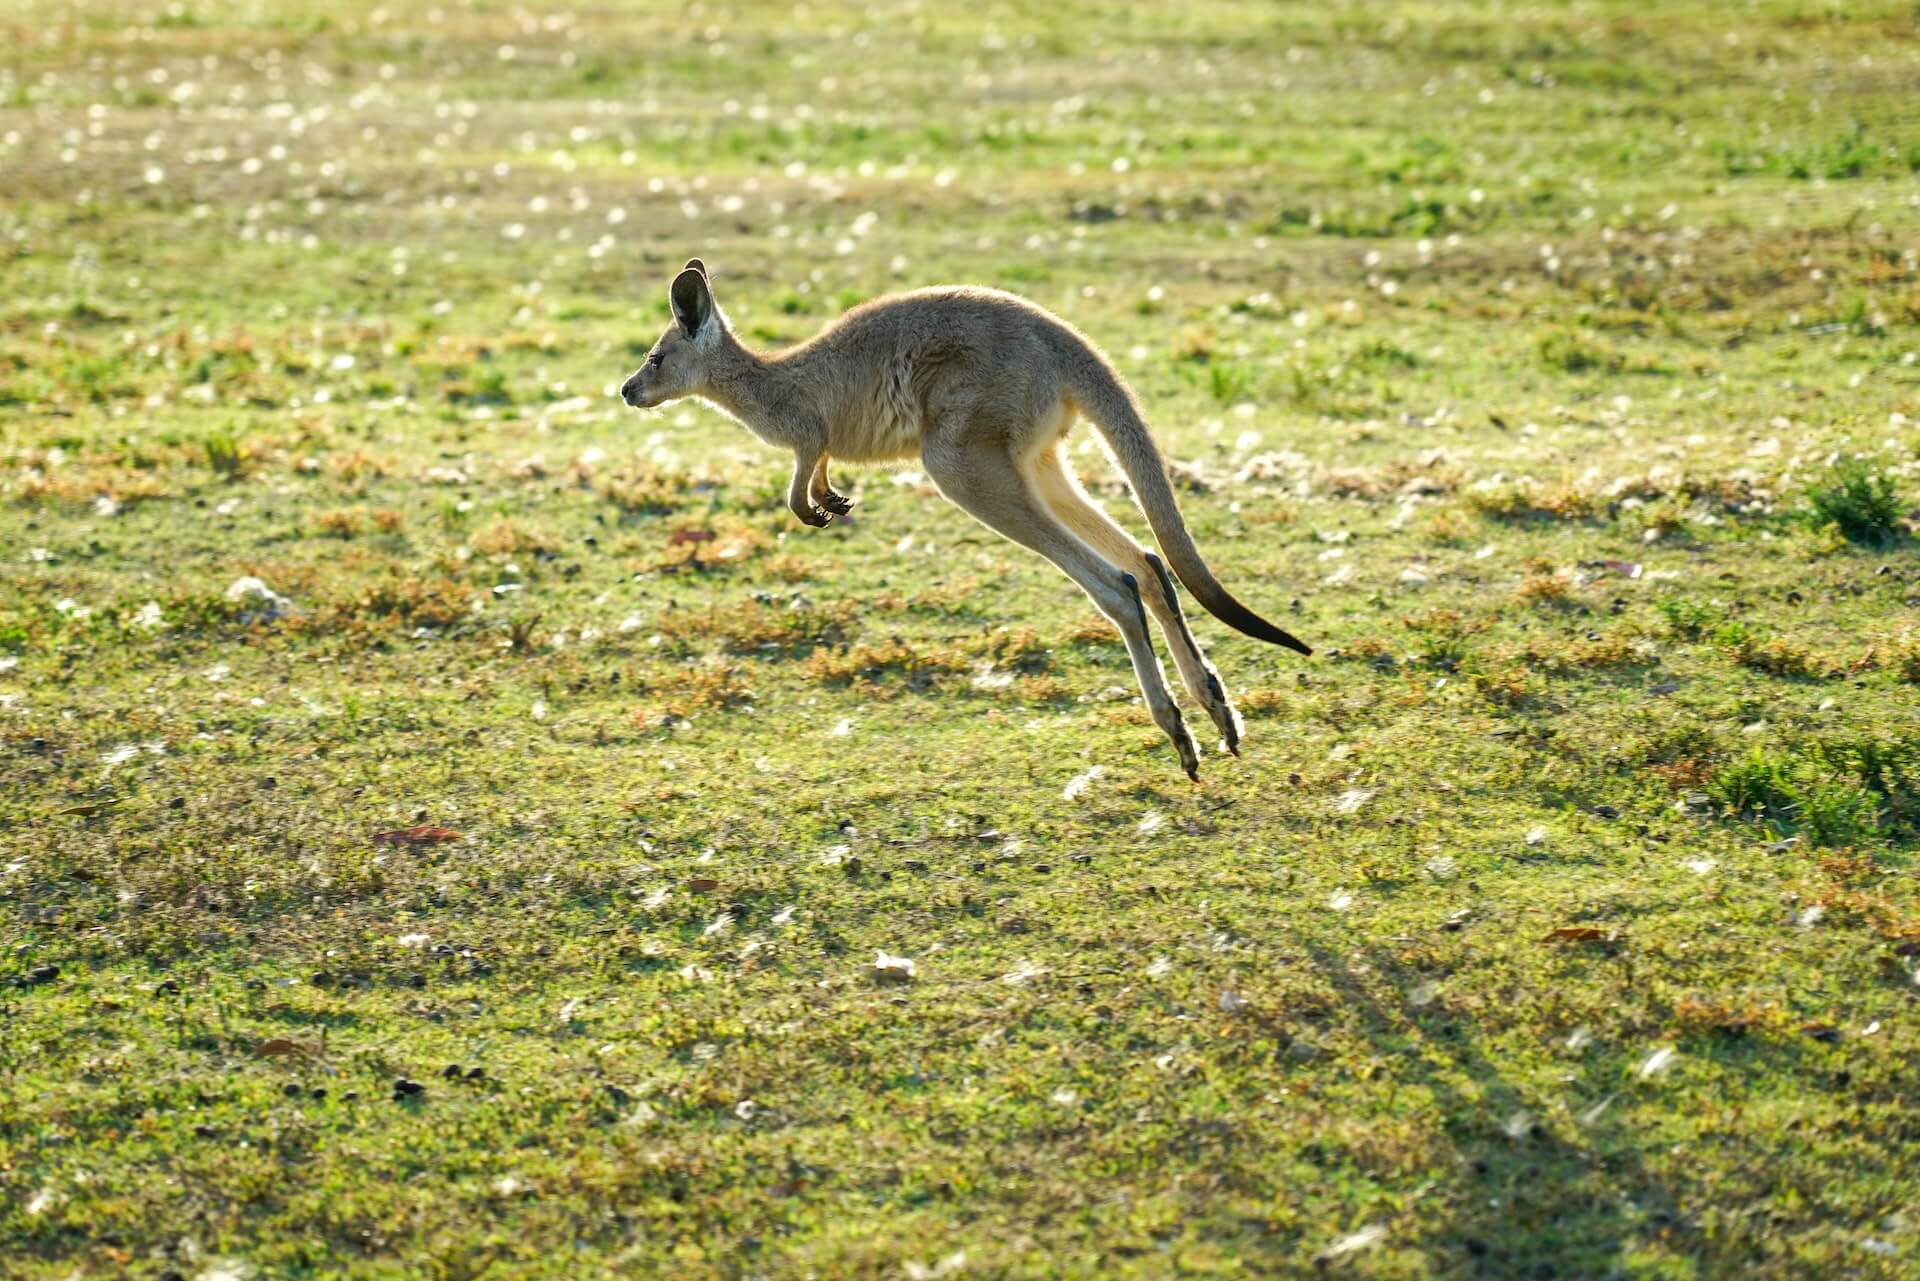 Kangaroo jumping on a field